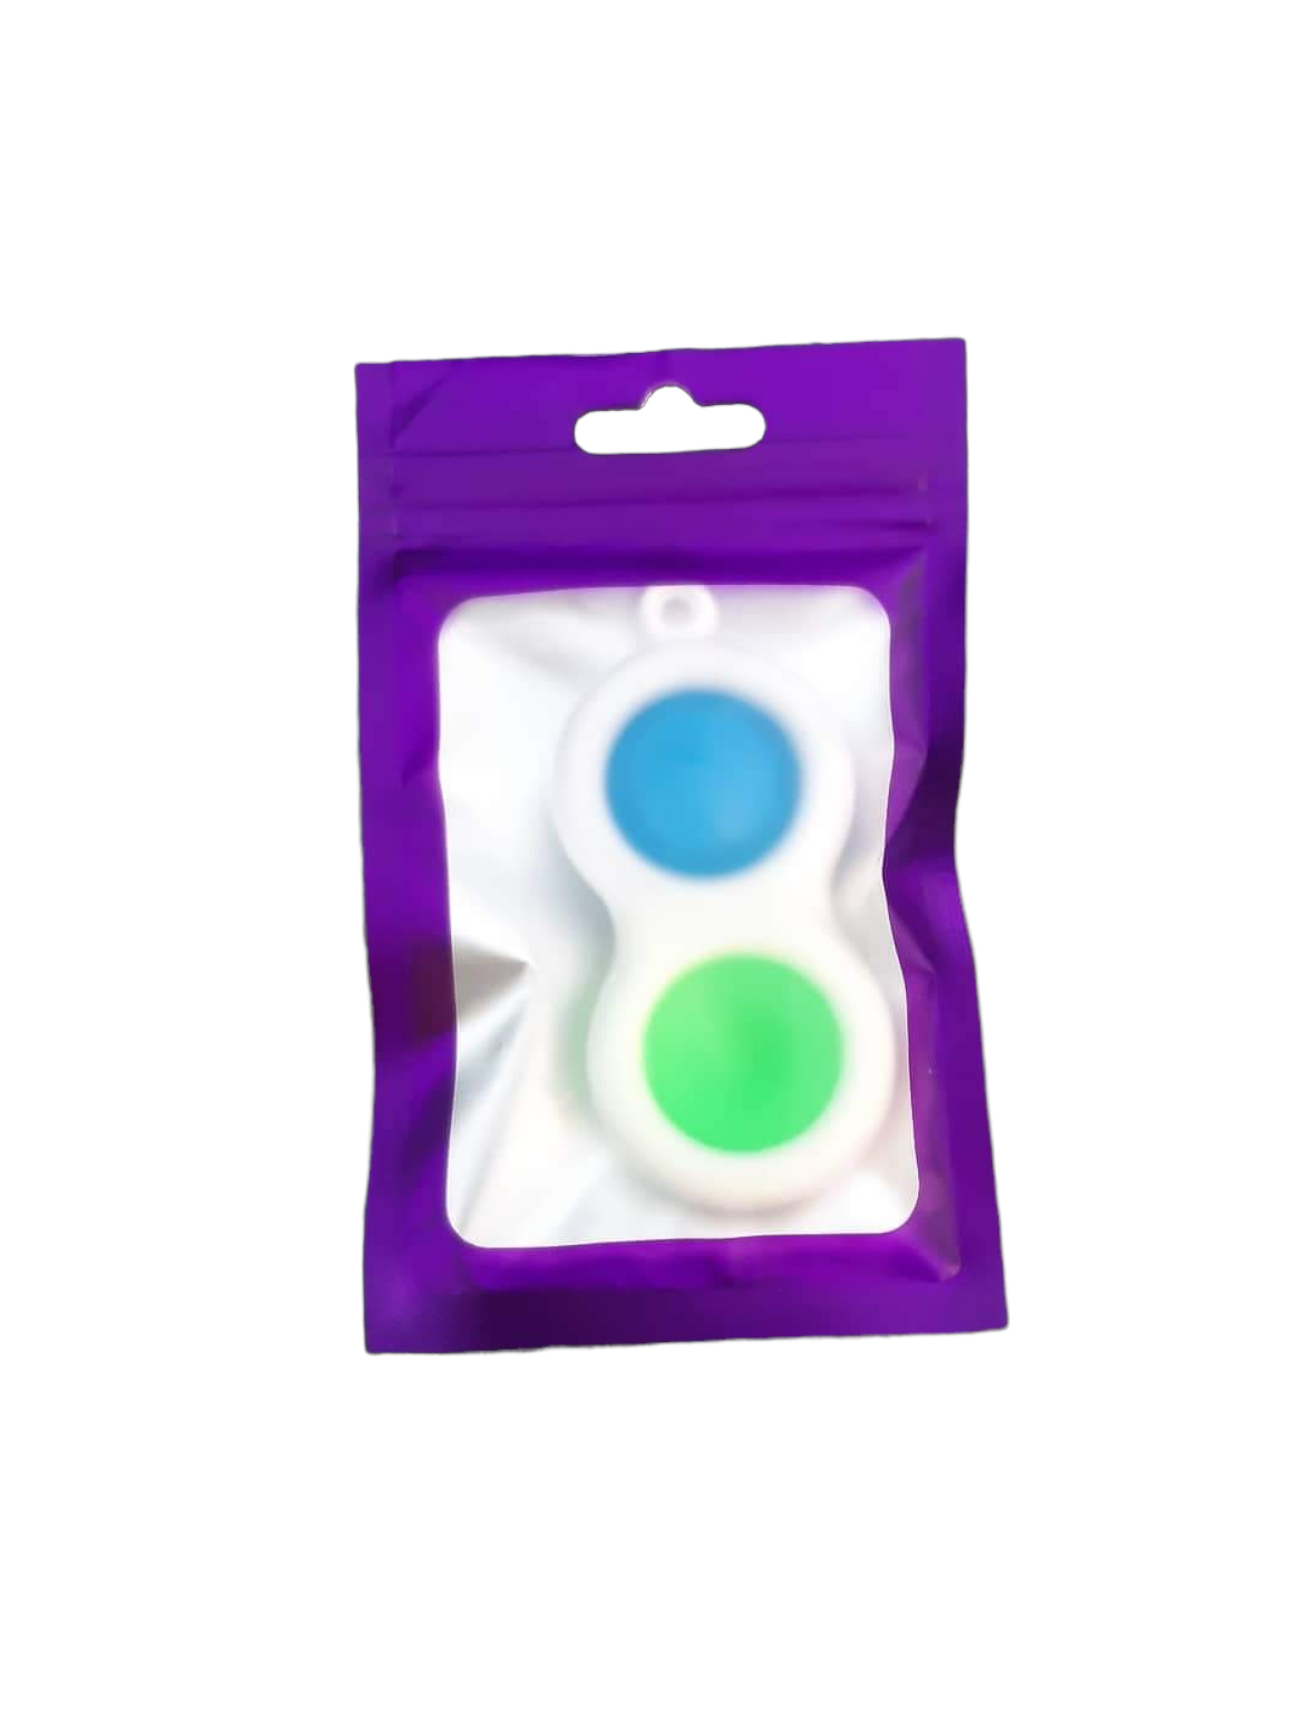 Fidget Toy — Double Popper  — Assorted Colours  SPIRIT SPARKPLUGS Blue + Green  